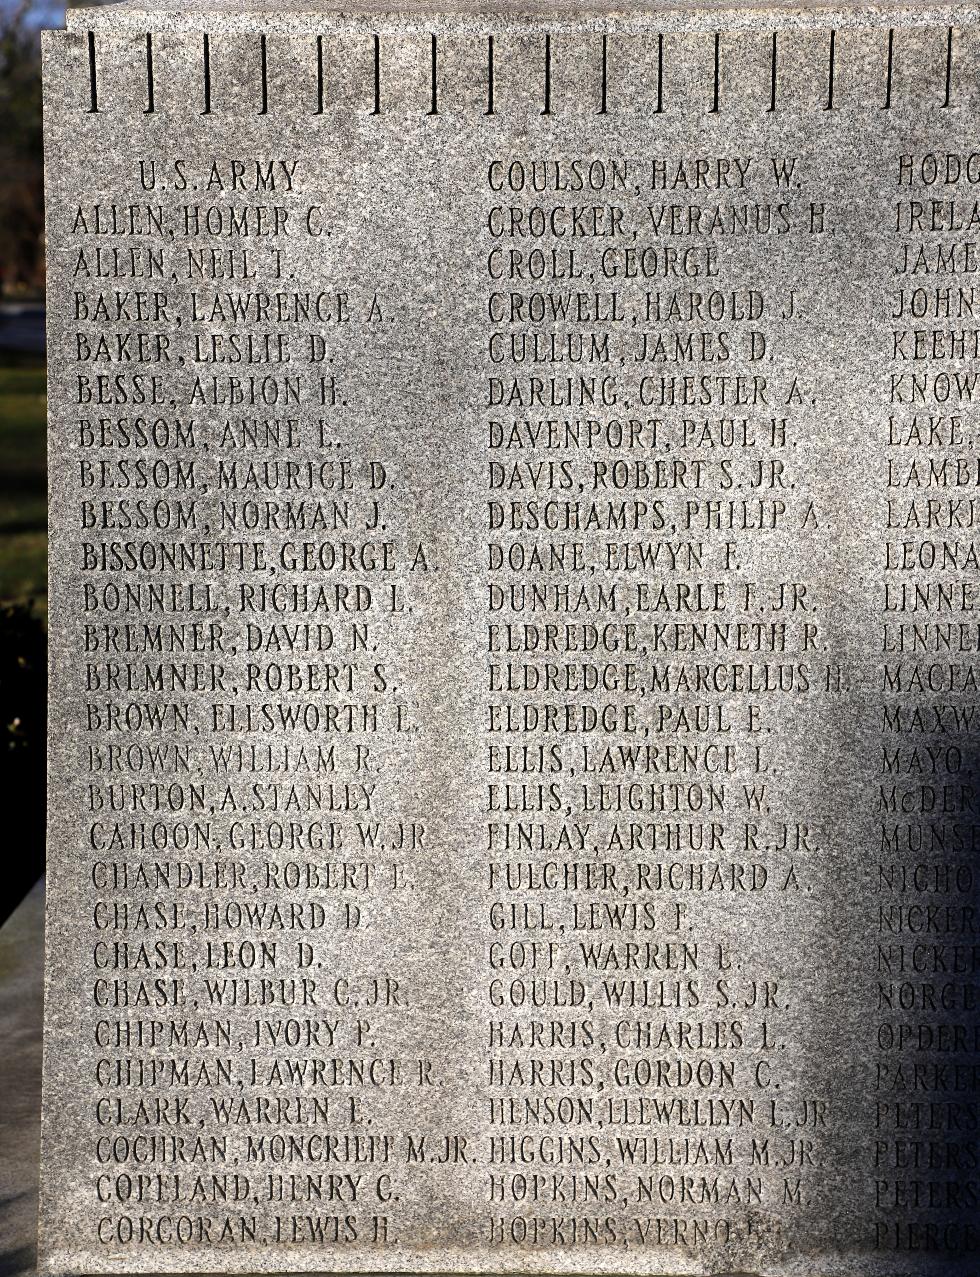 Orleans Massachusetts World War II Veterans Memorial